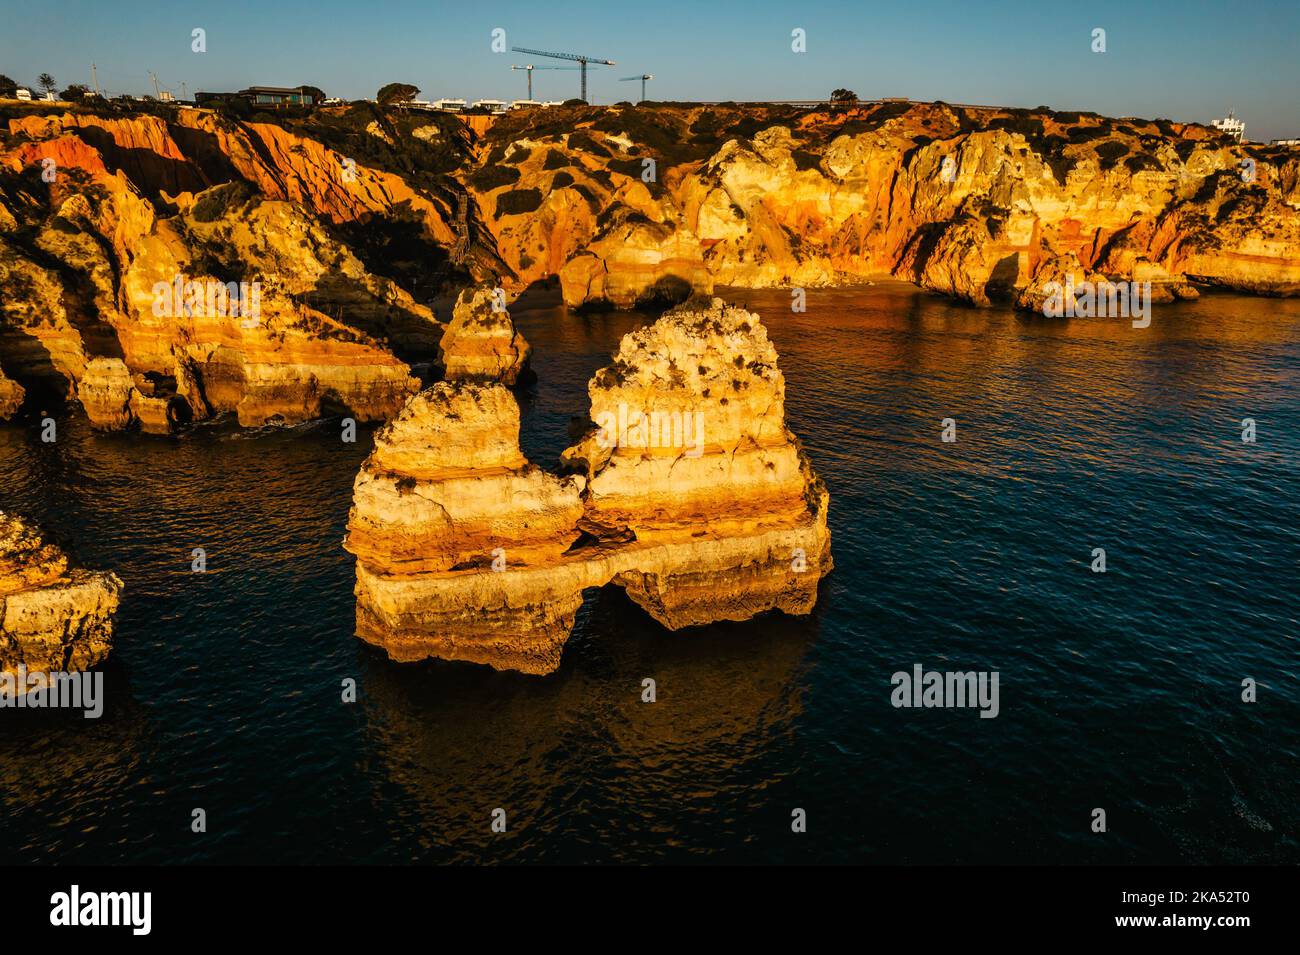 Goldene Klippen bei Sonnenaufgang in Ponta da Piedade bei Lagos, Portugal.spektakuläre Felsformationen mit Höhlen, Grotten und Meeresbögen.Sommer vacati Stockfoto